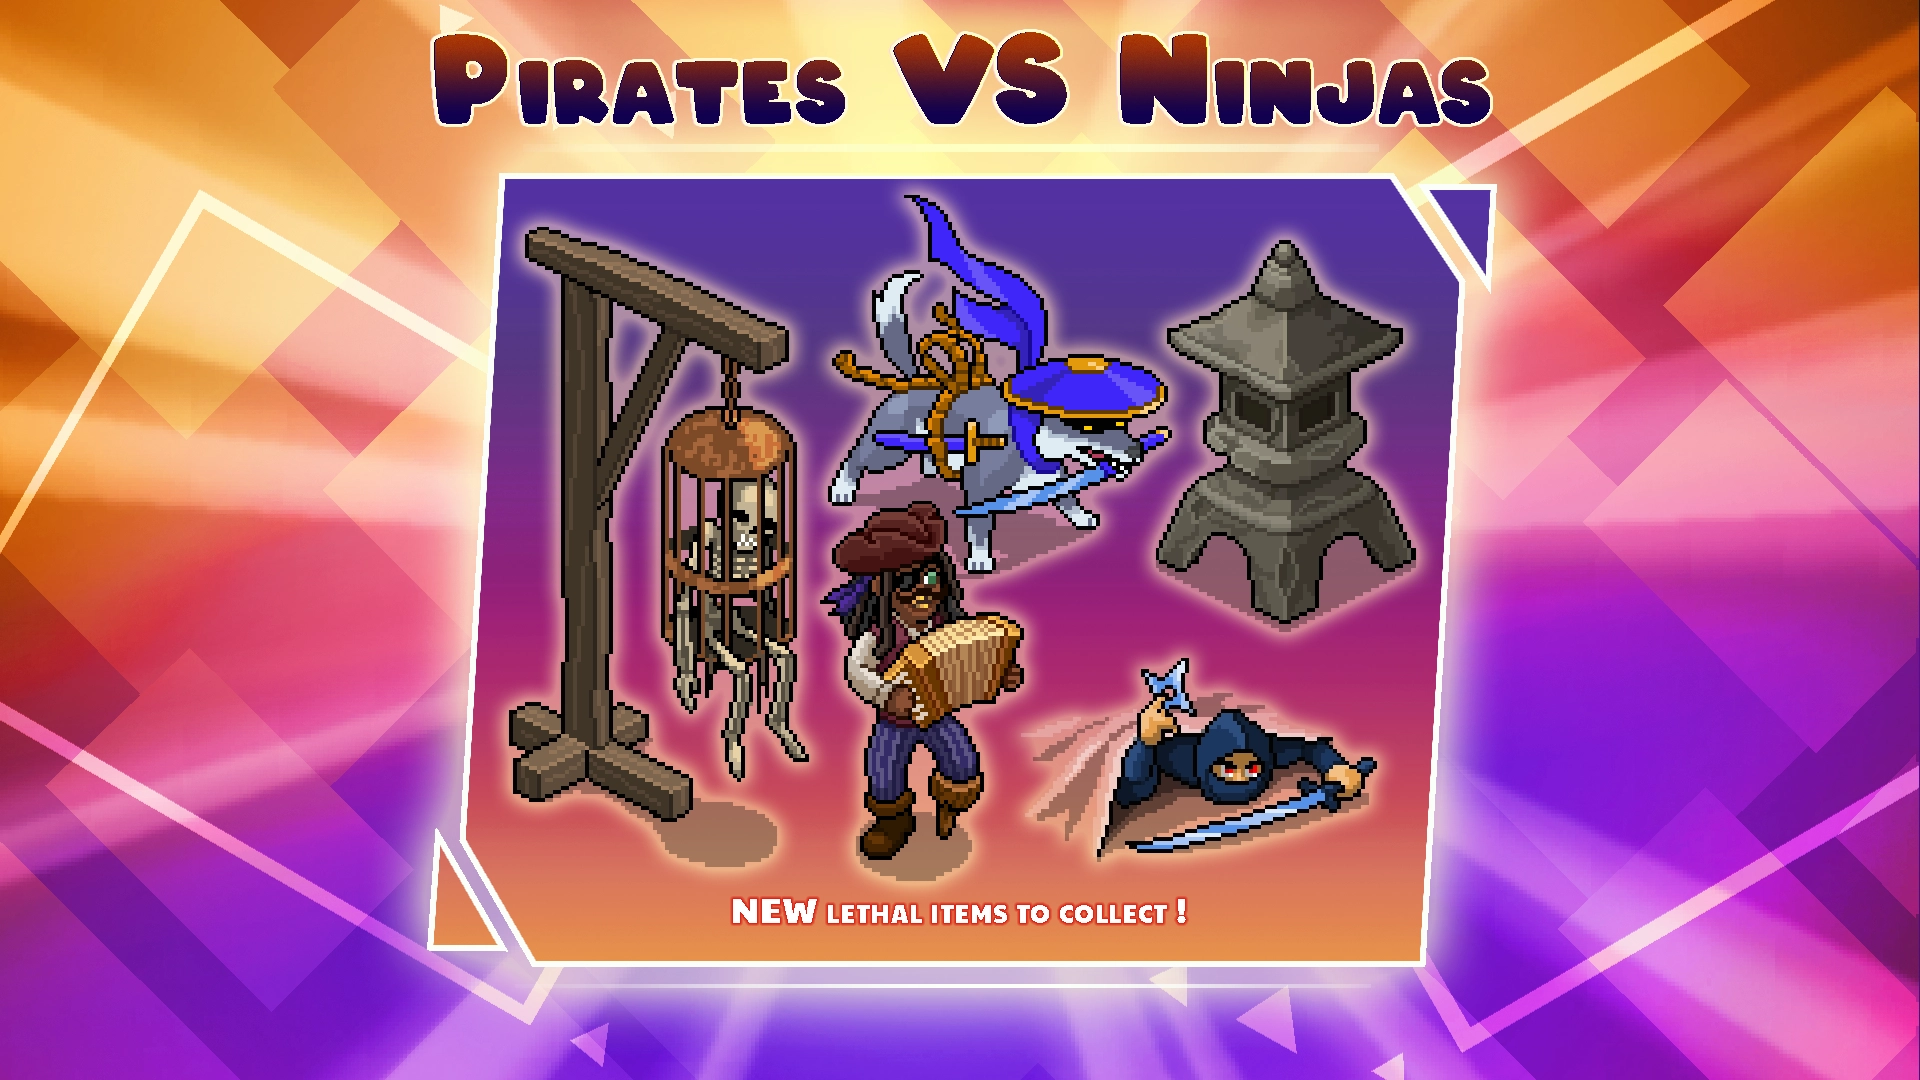 New items from PewDiePie's Tuber Simulator Pirates VS Ninjas Update